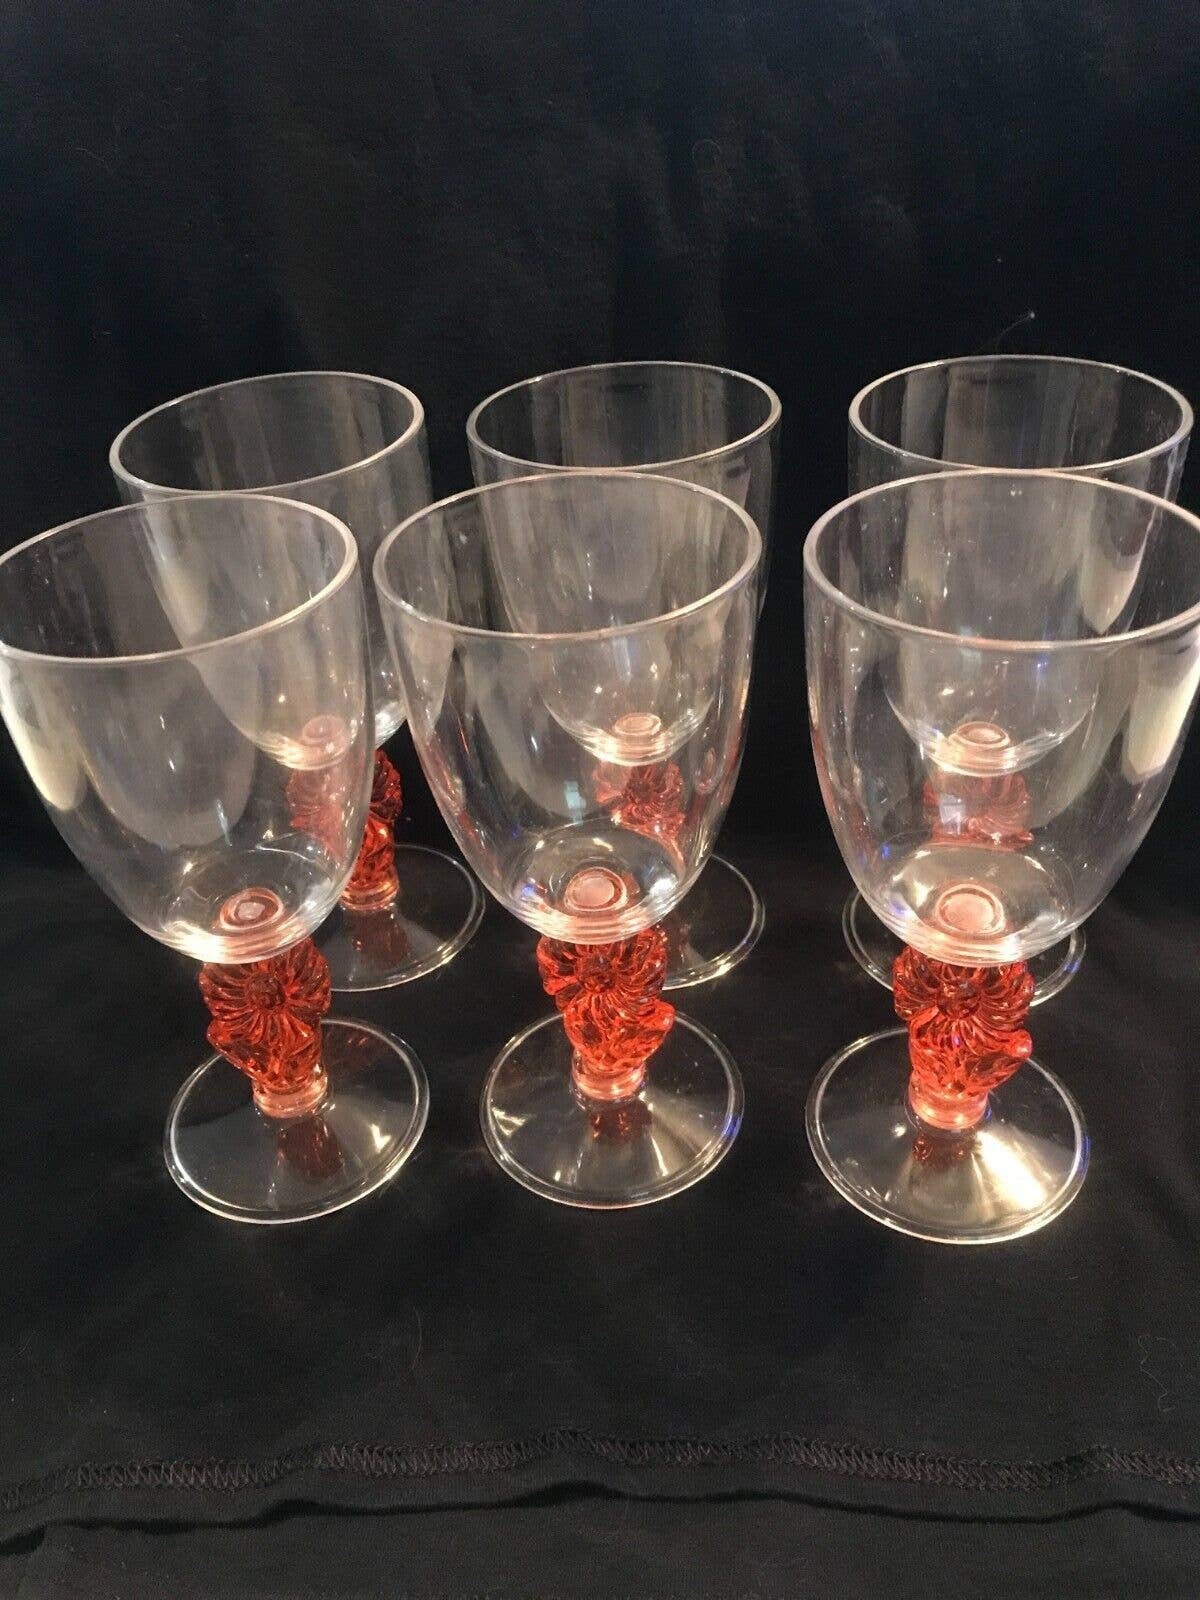 Unbreakable Plastic Stemless Wine Glasses 18 oz - 100% Tritan - Propri